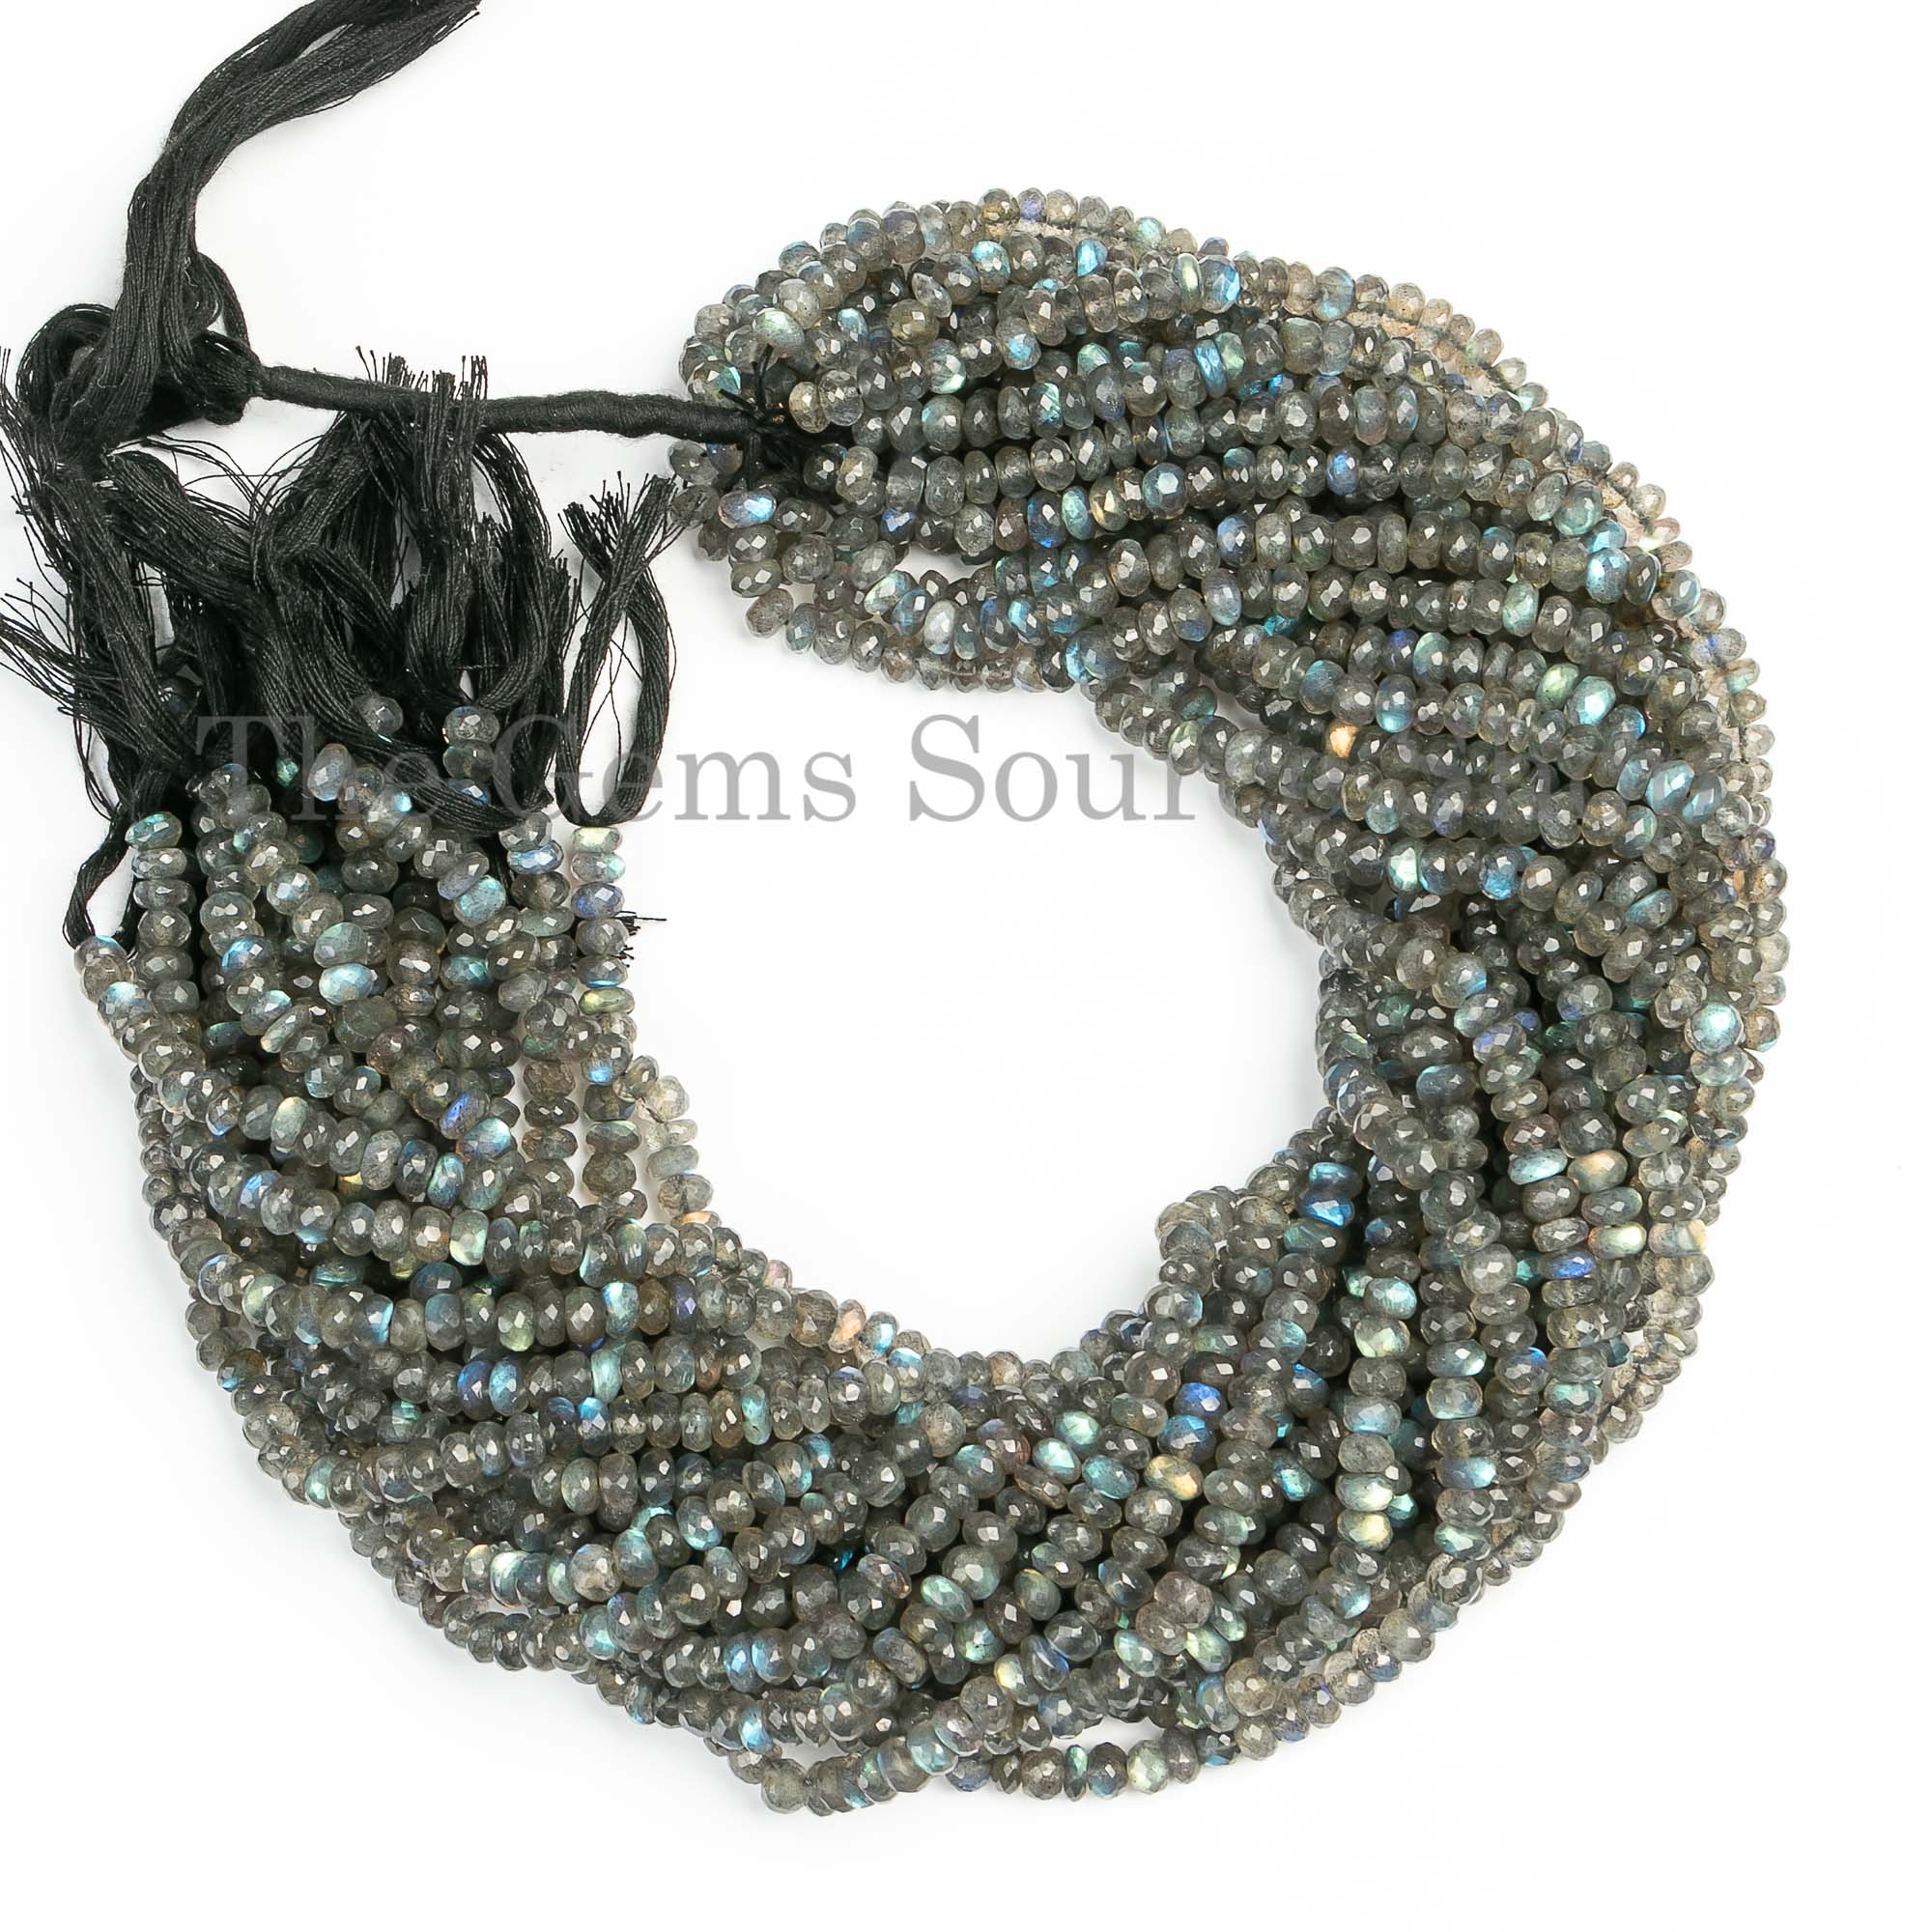 Labradorite Beads, Labradorite Faceted Rondelle Shape Beads, Labradorite Gemstone Beads